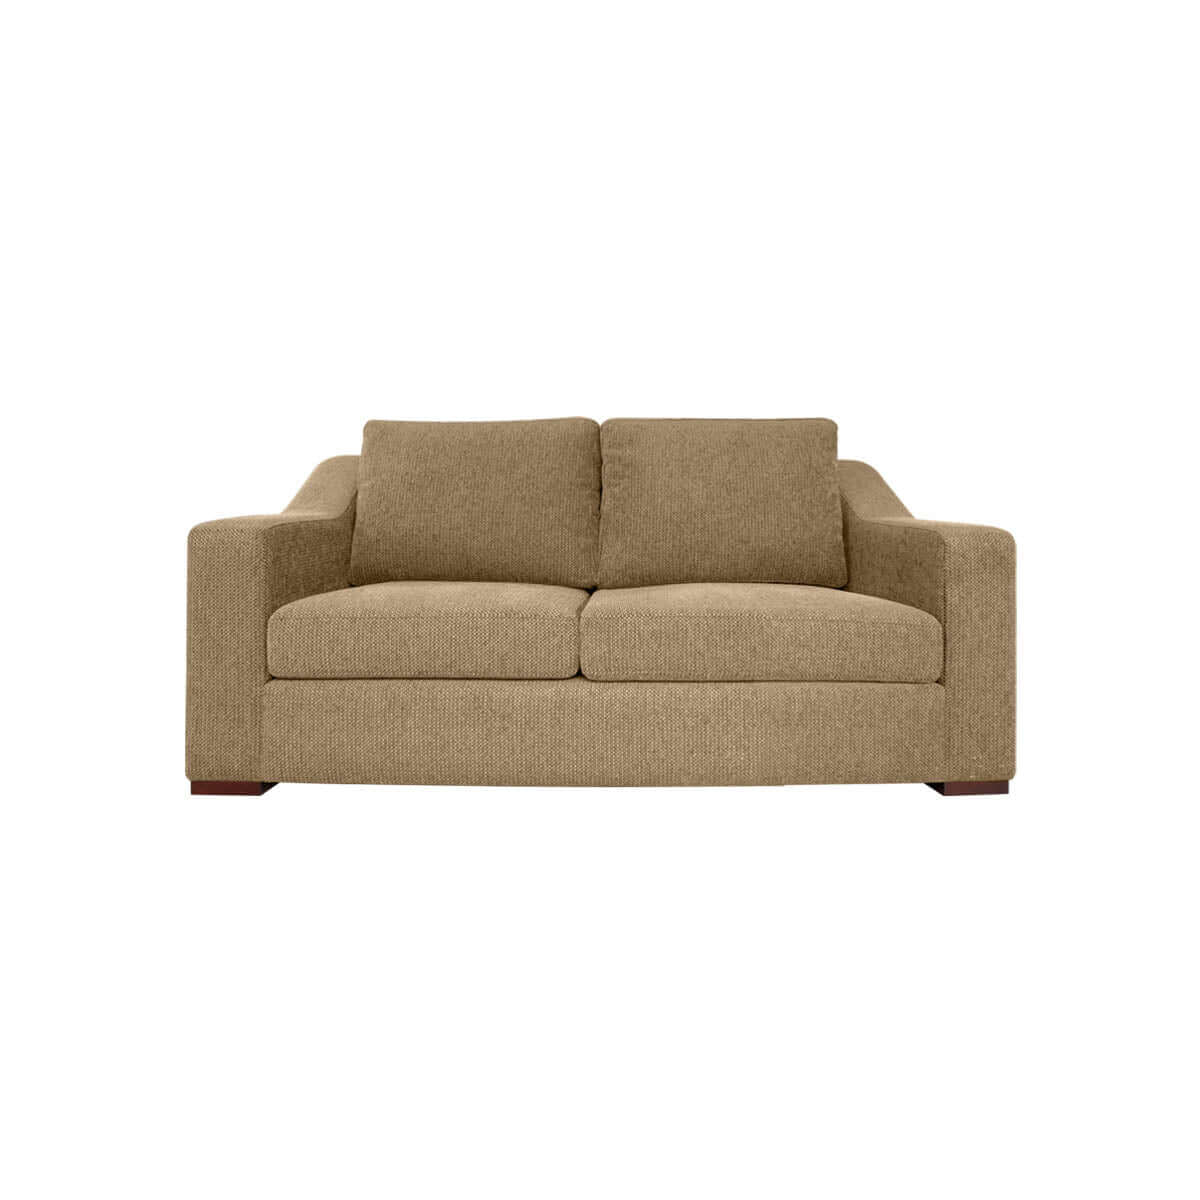 Presidio two seat sofa with prestigious accent arm furniture